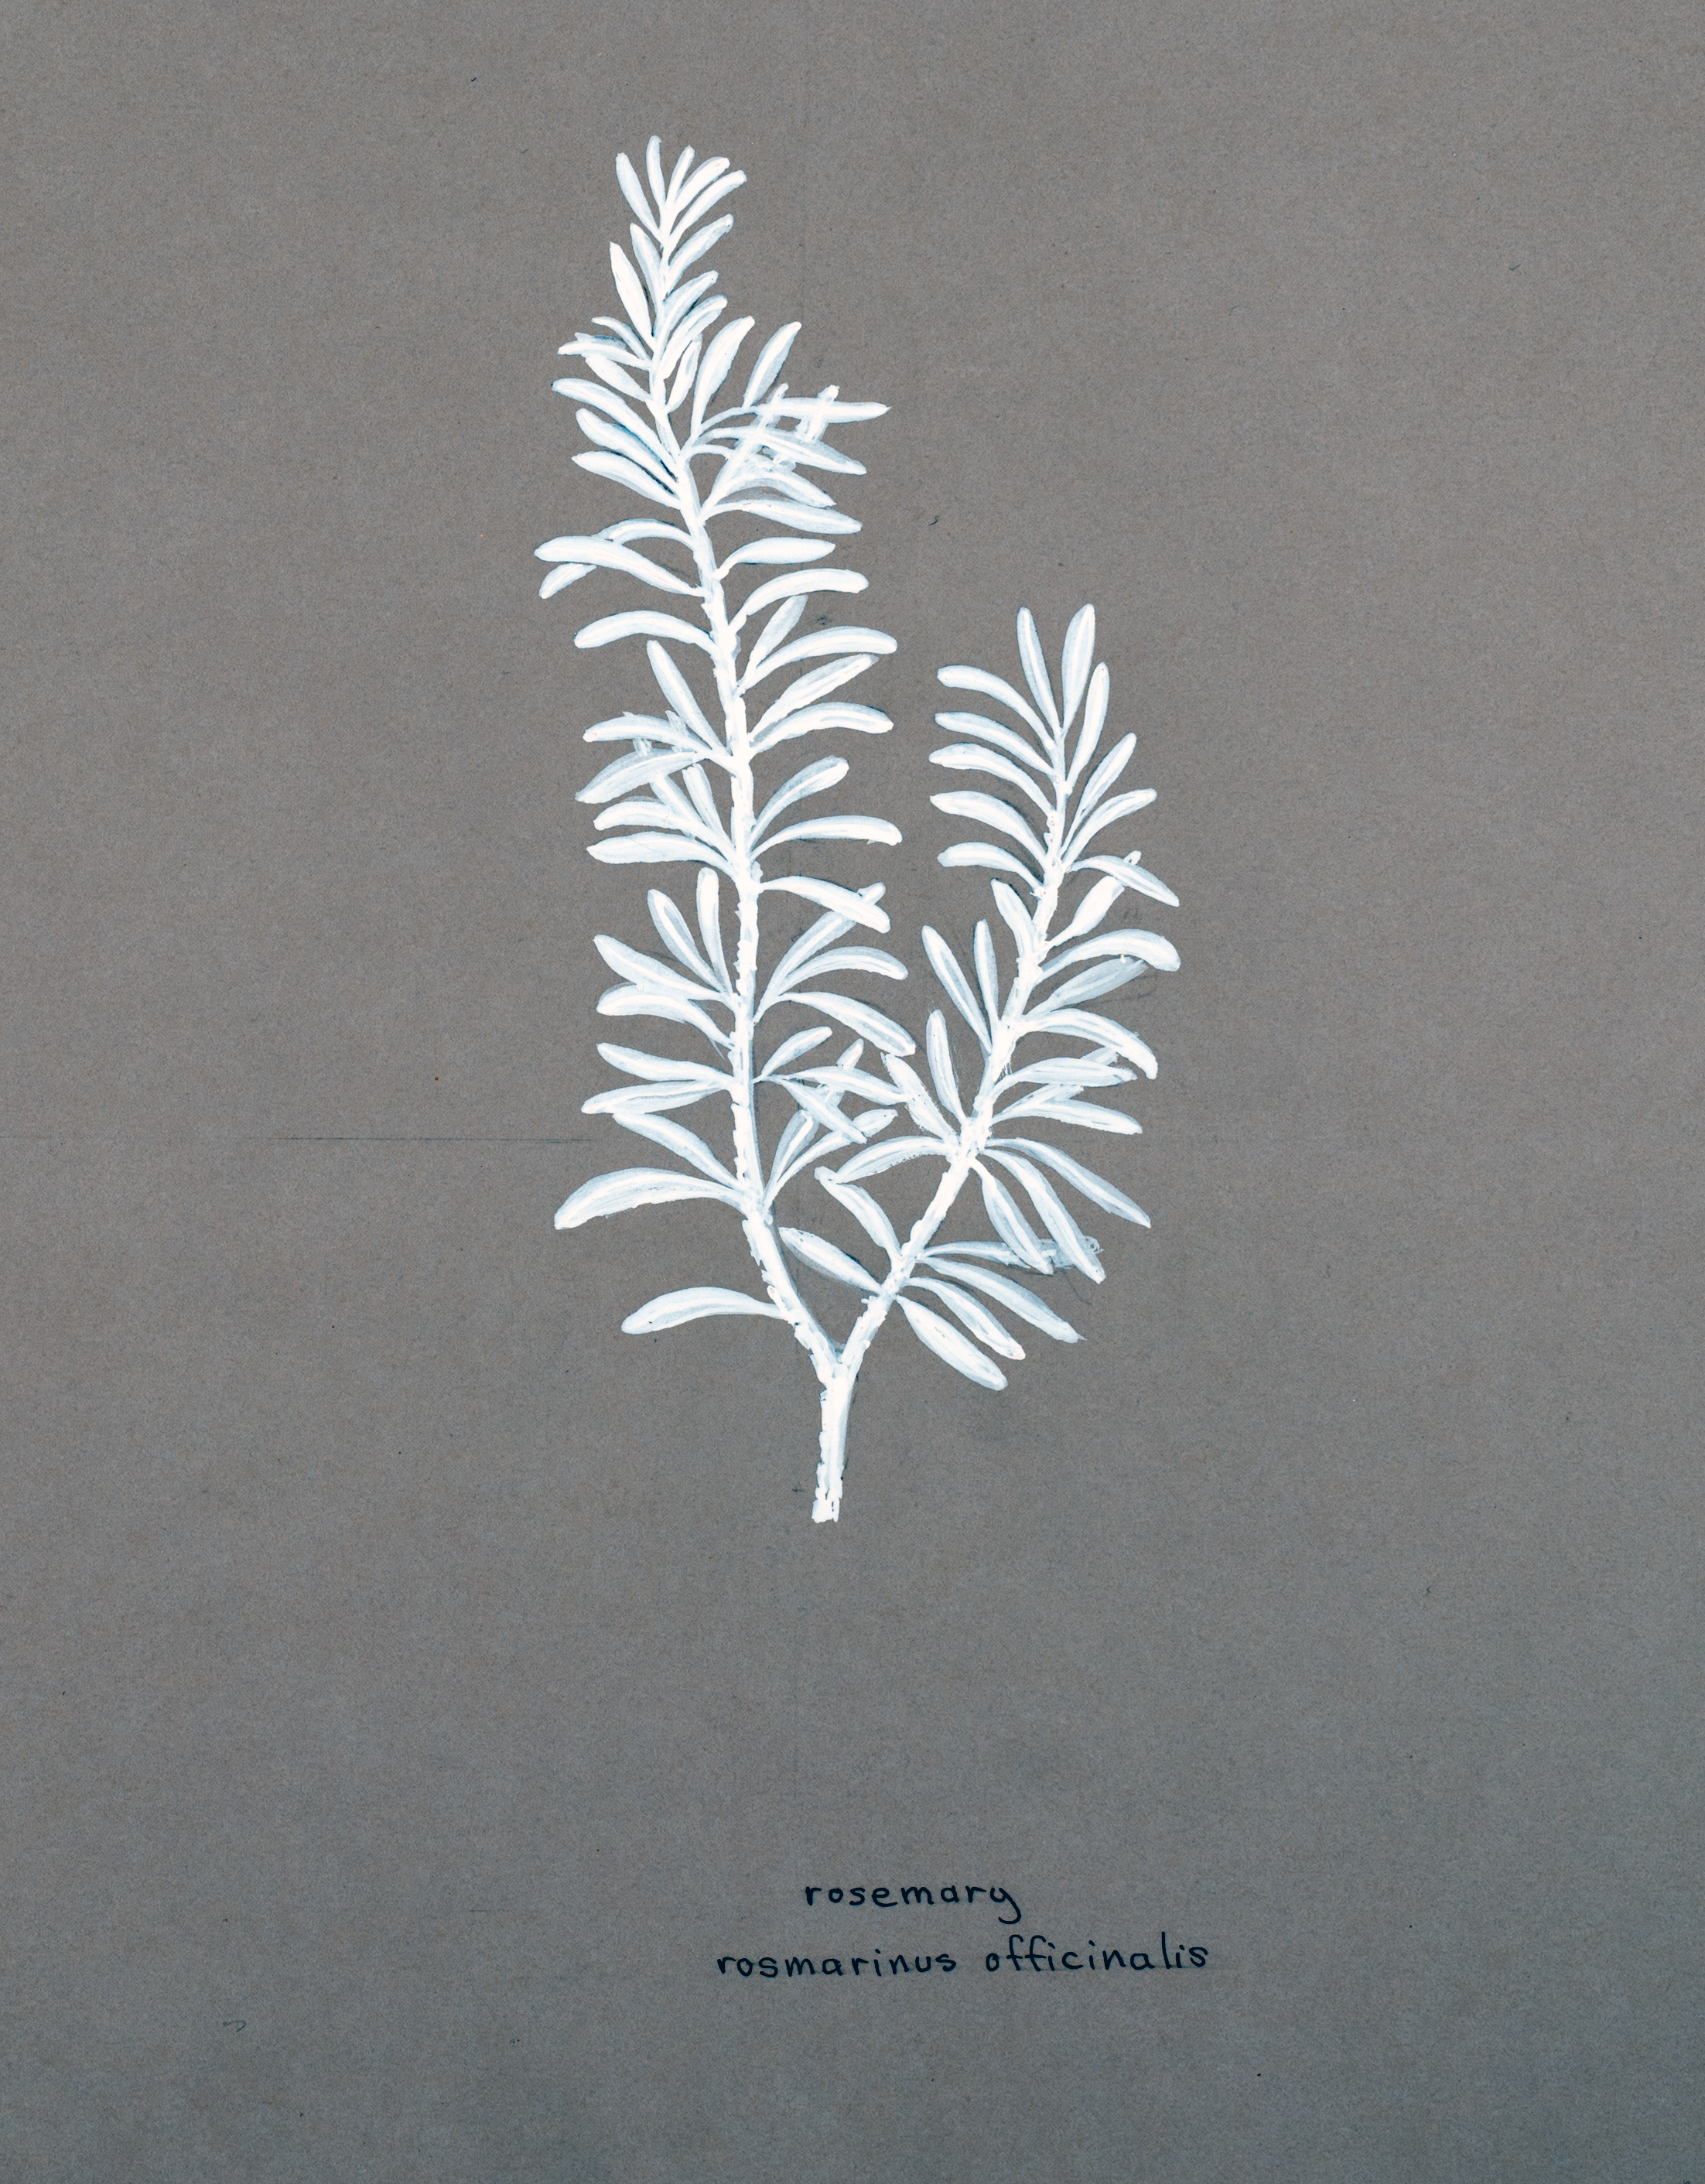 Artist's sketch of Rosemary (Rosmarinus officinalis)